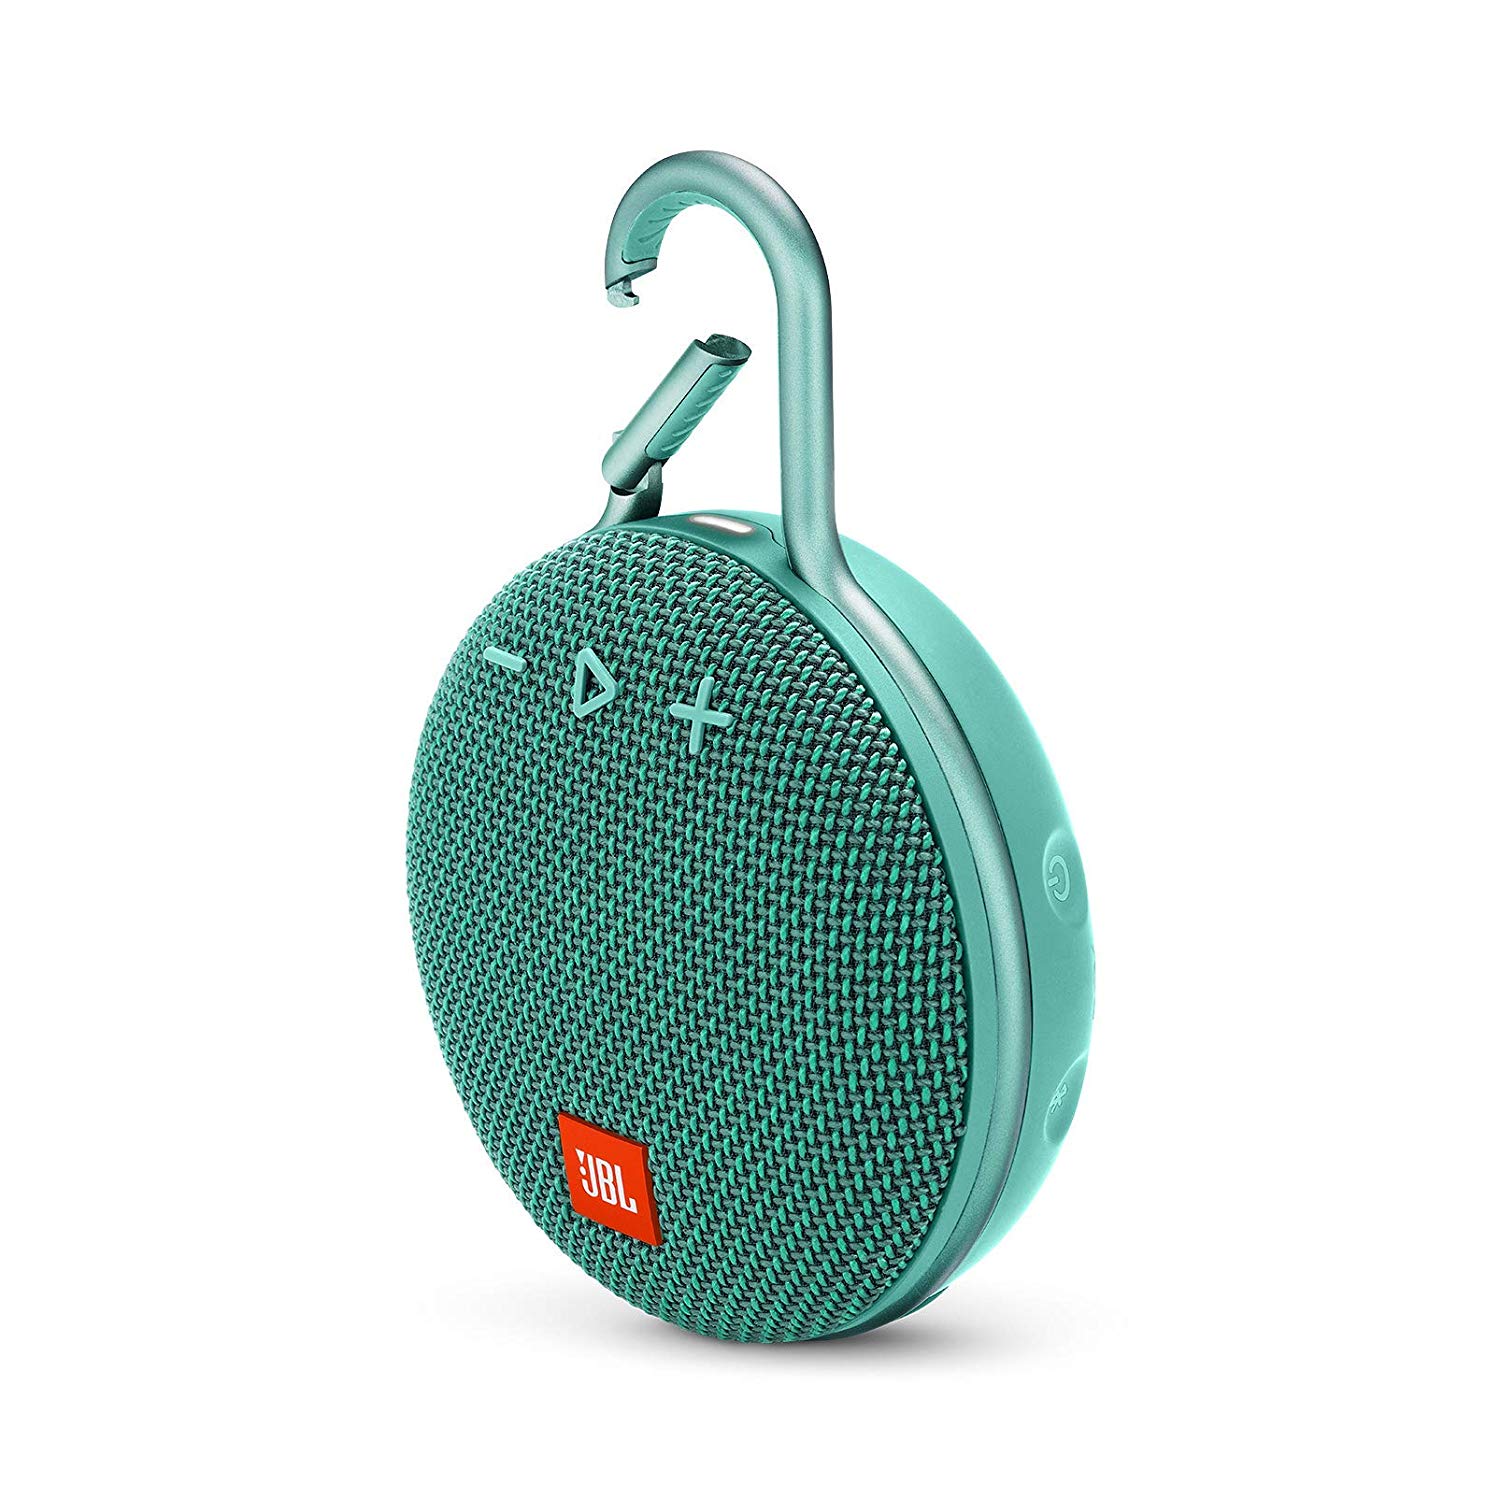 JBL Clip 3 Portable Waterproof Wireless Bluetooth Speaker - Teal - CLIP3-TEAL